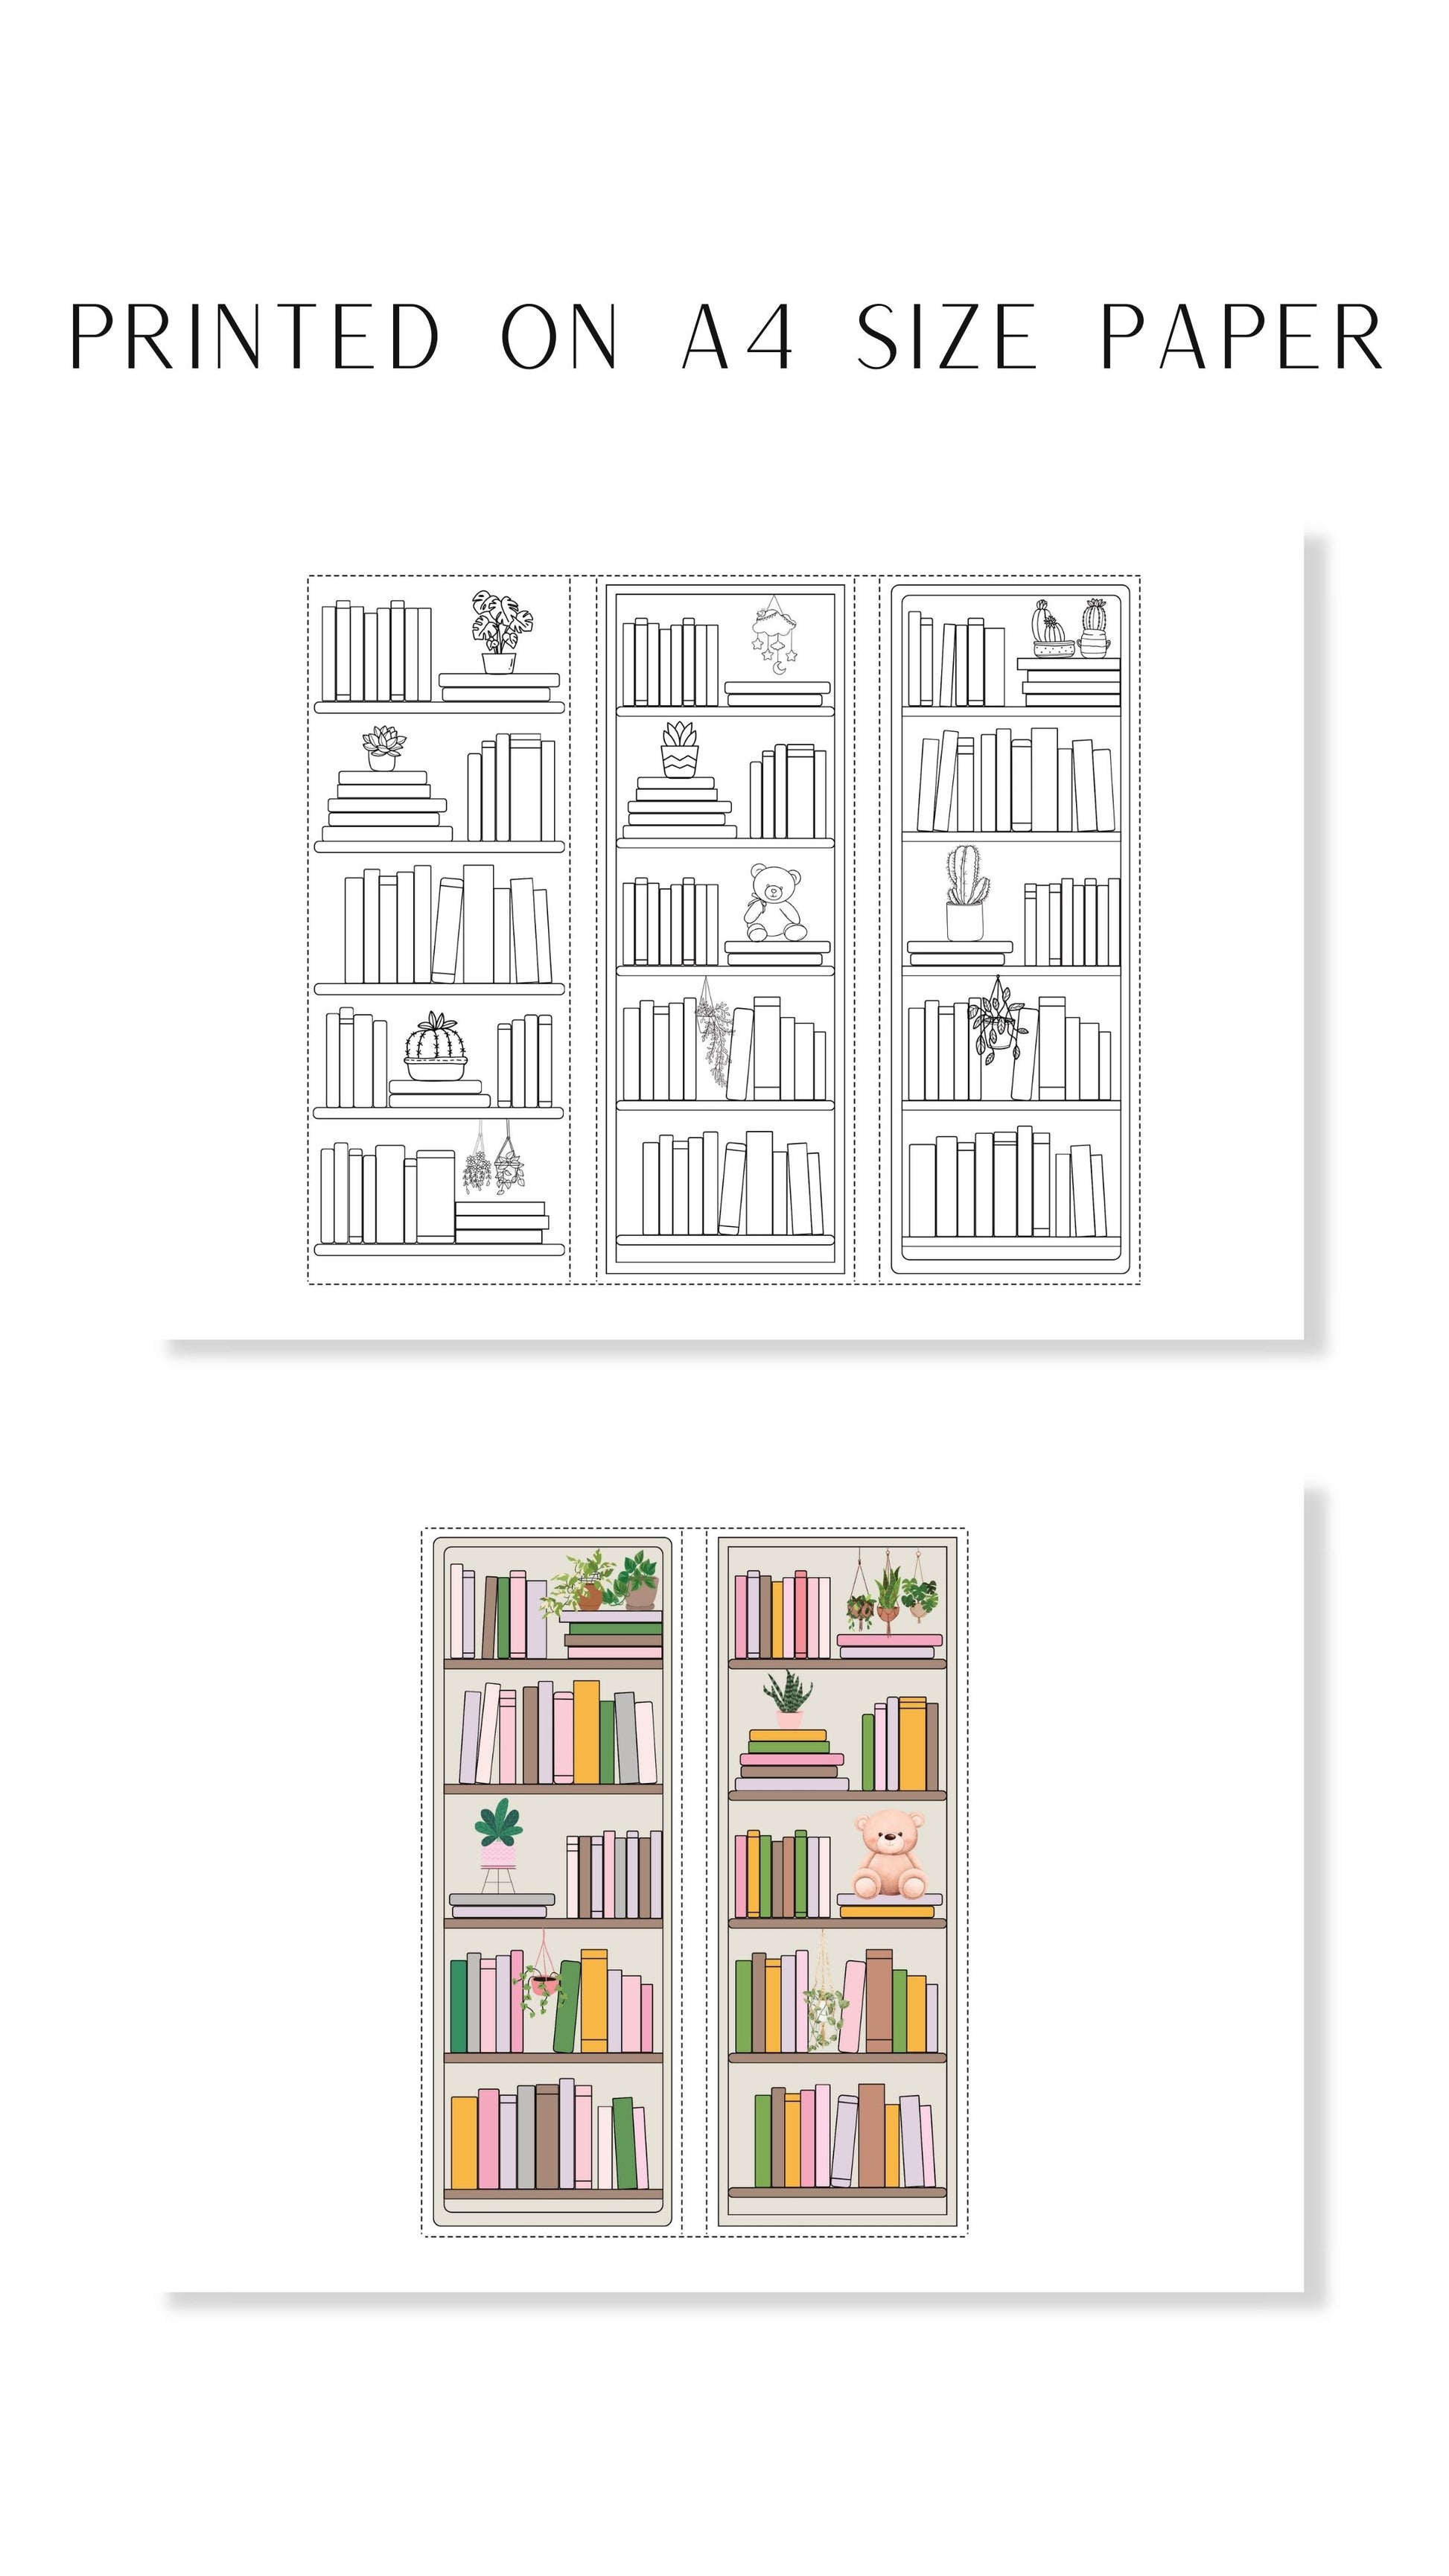 Printable Bookshelf Bookmark 5 Designs, Colors and Neutral Theme, 50 Books Each